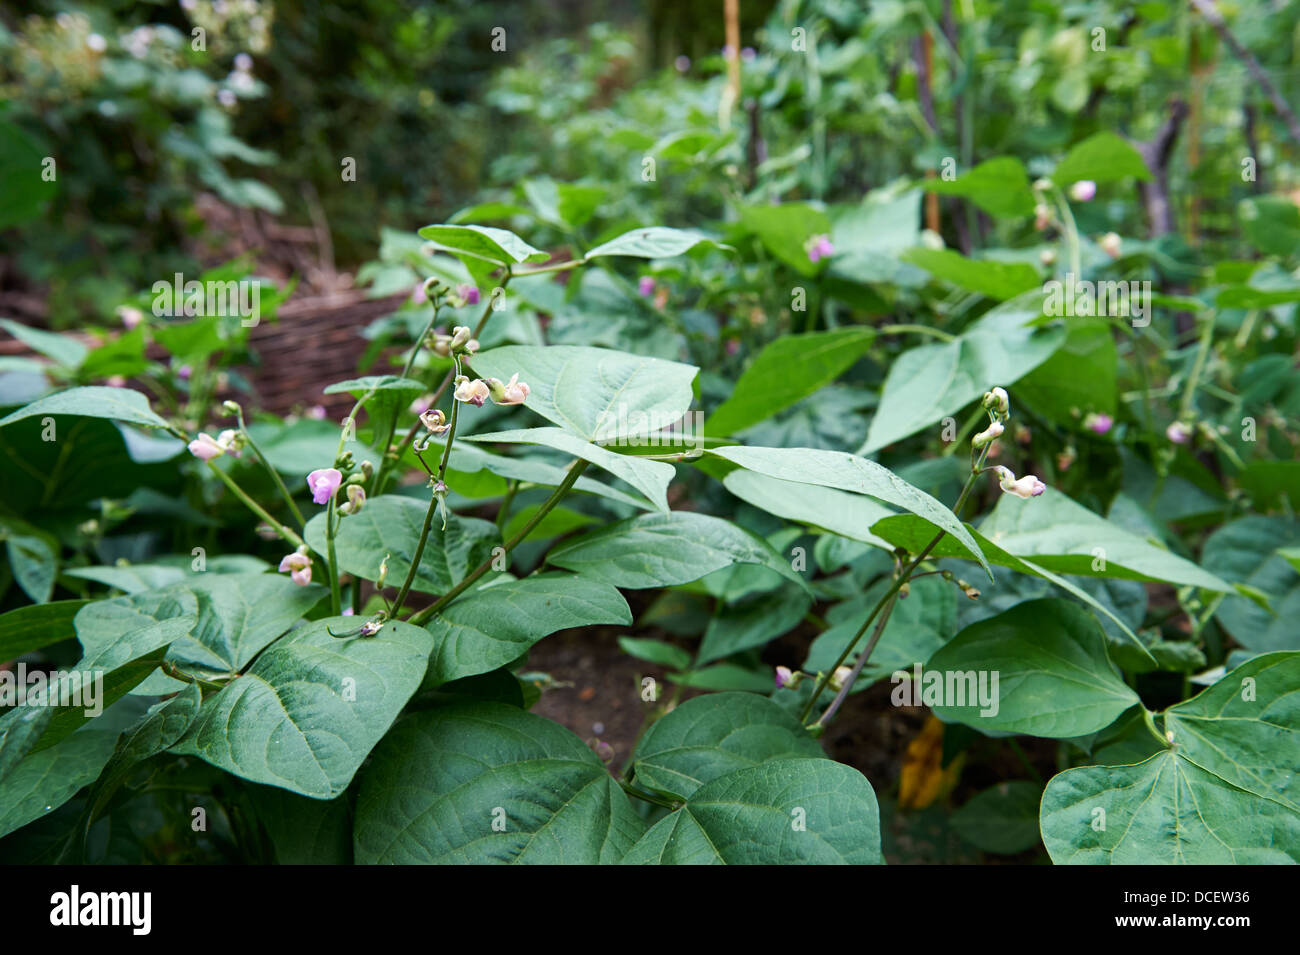 Dwarf Bean Plants 'Fandango' in Vegetable Patch, England, UK. Stock Photo